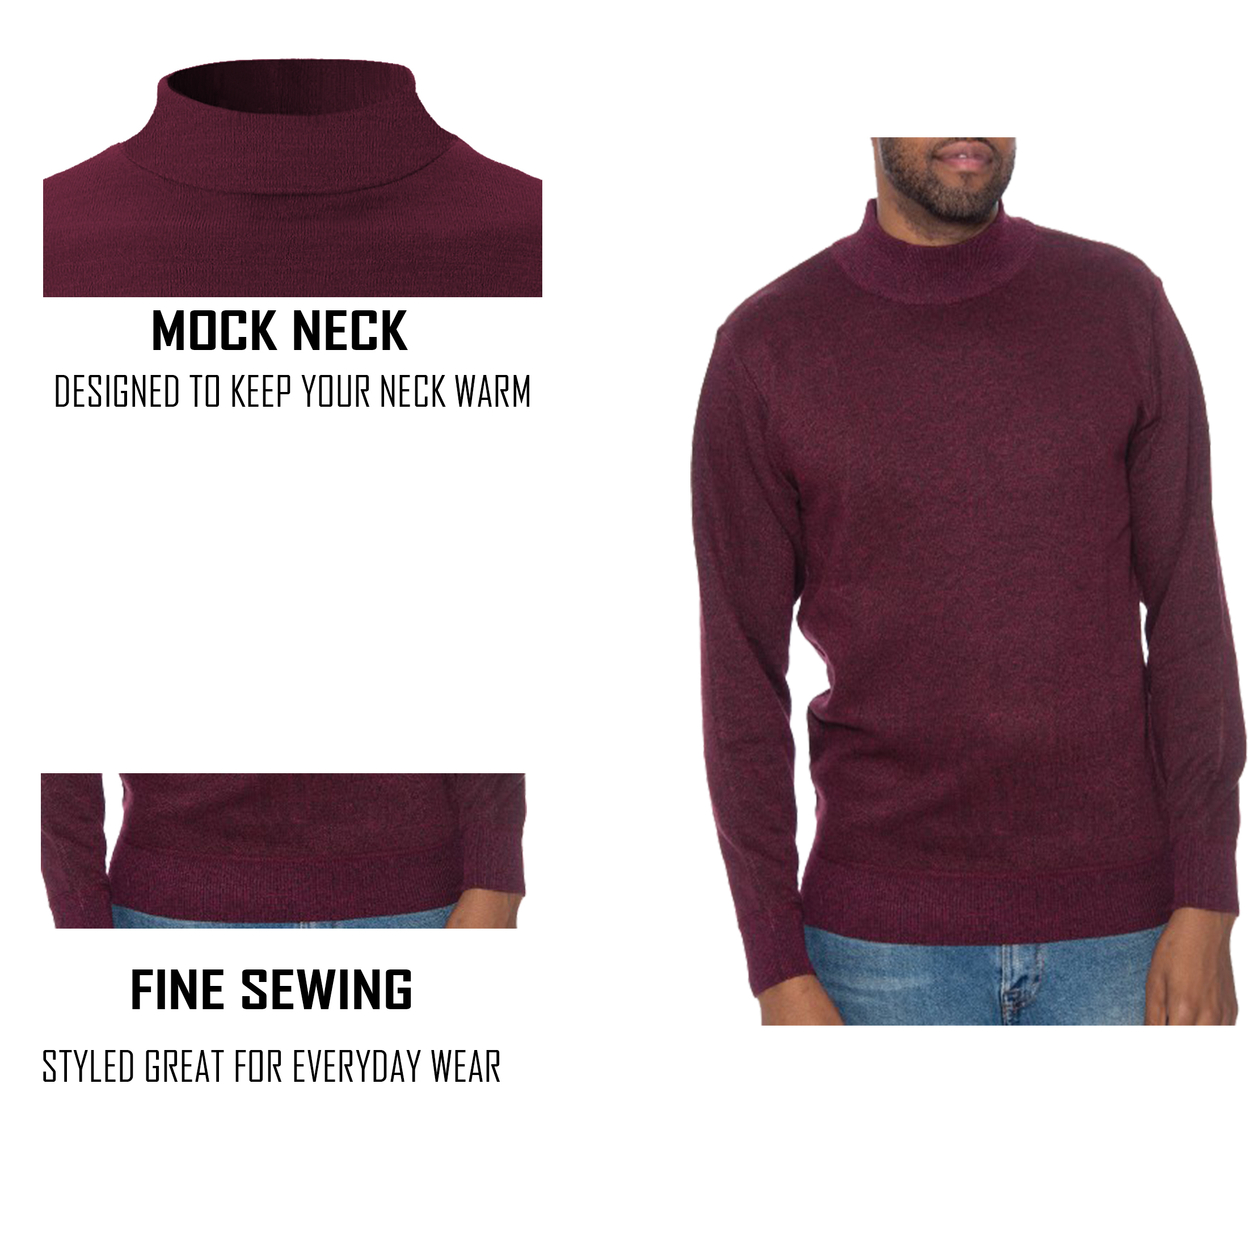 2-Pack: Men's Winter Warm Cozy Knit Slim Fit Mock Neck Sweater - Black & Charcoal, Large